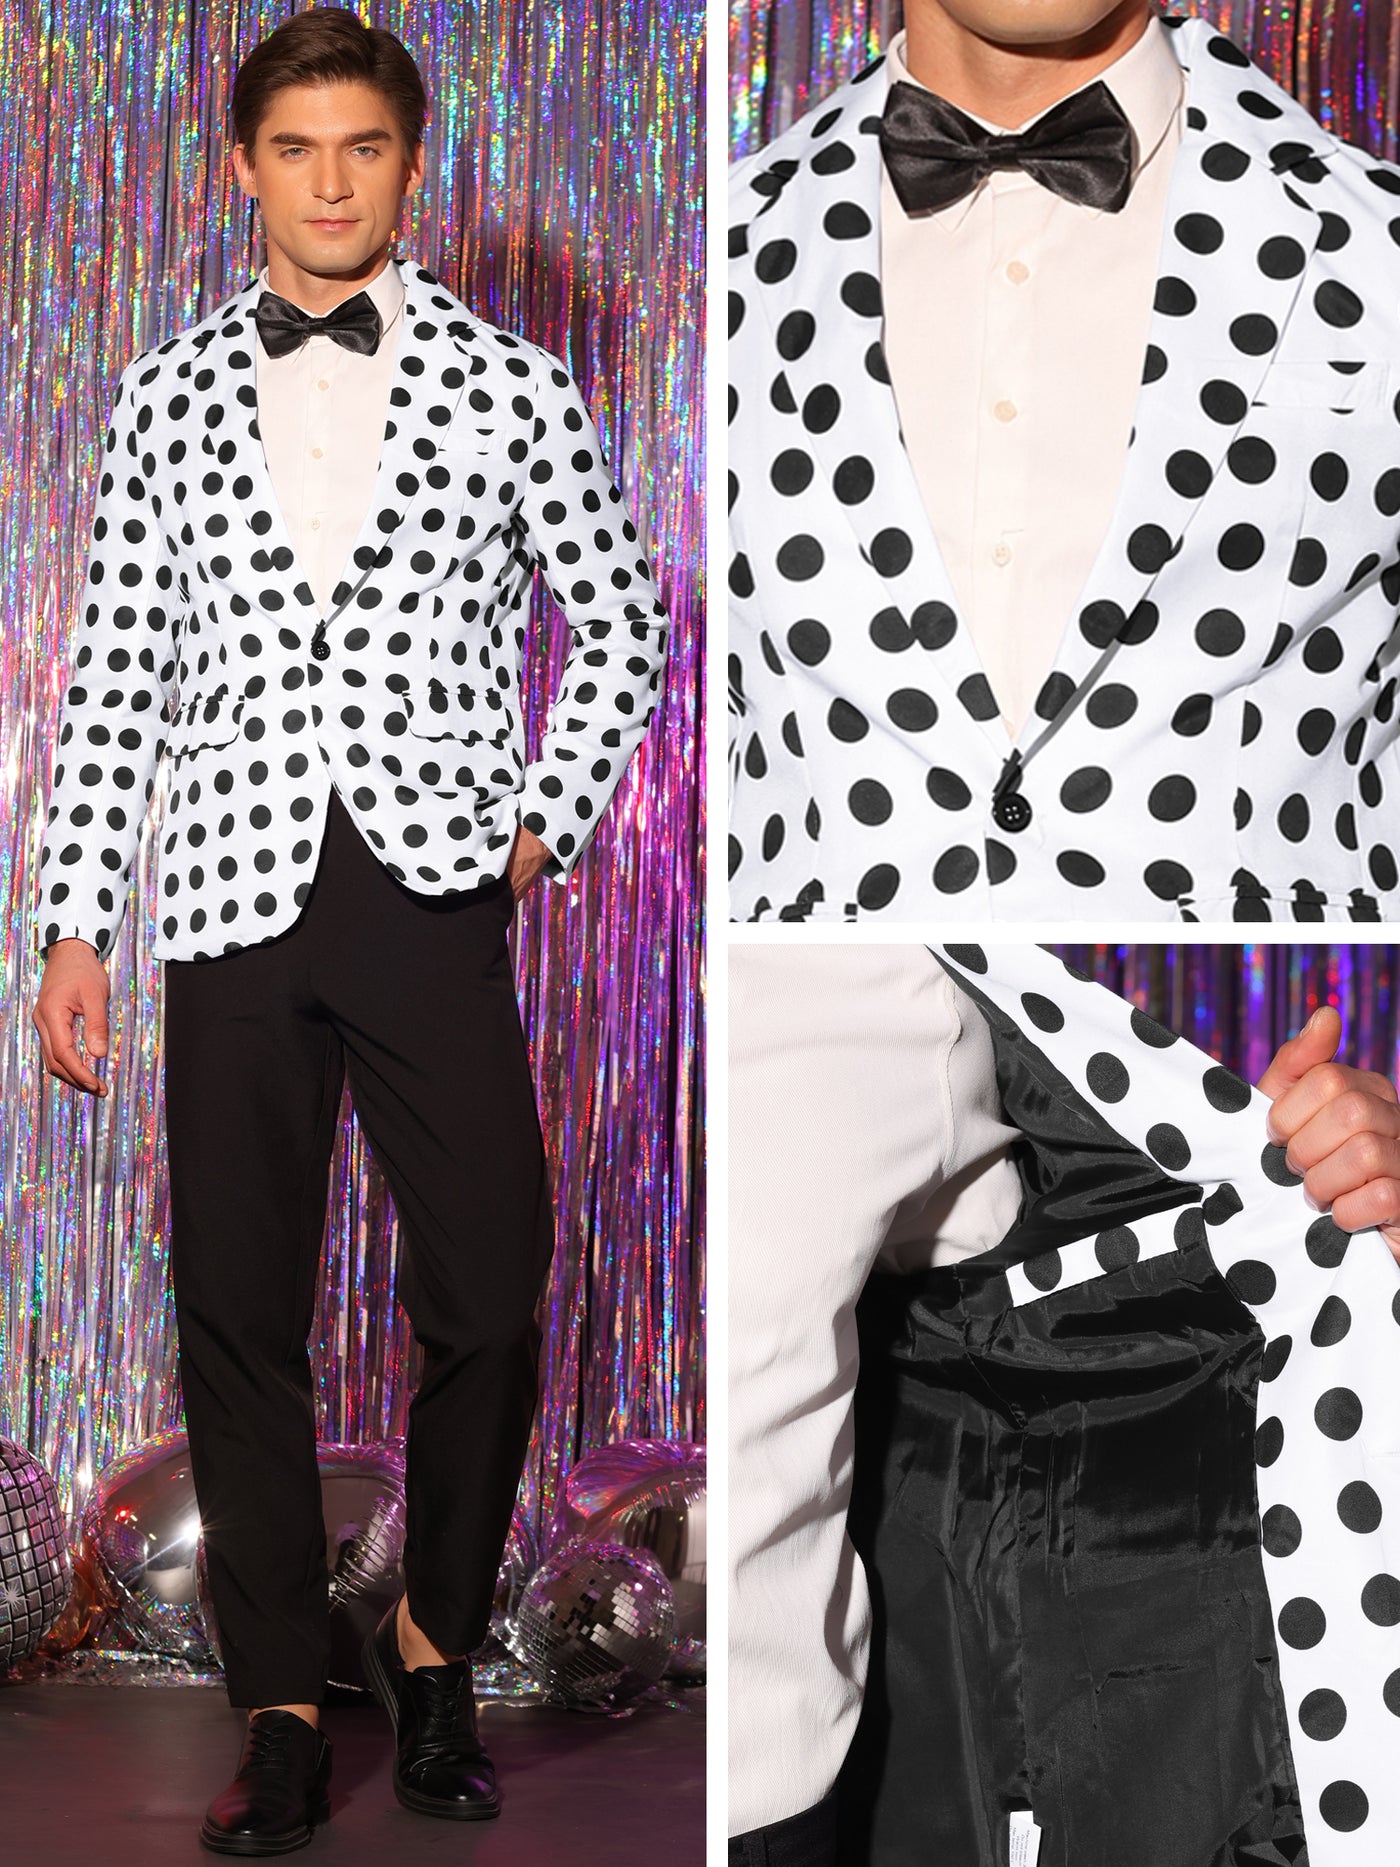 Bublédon Polka Dots Blazers for Men's Notch Lapel One Button Wedding Suit Jacket Sports Coats